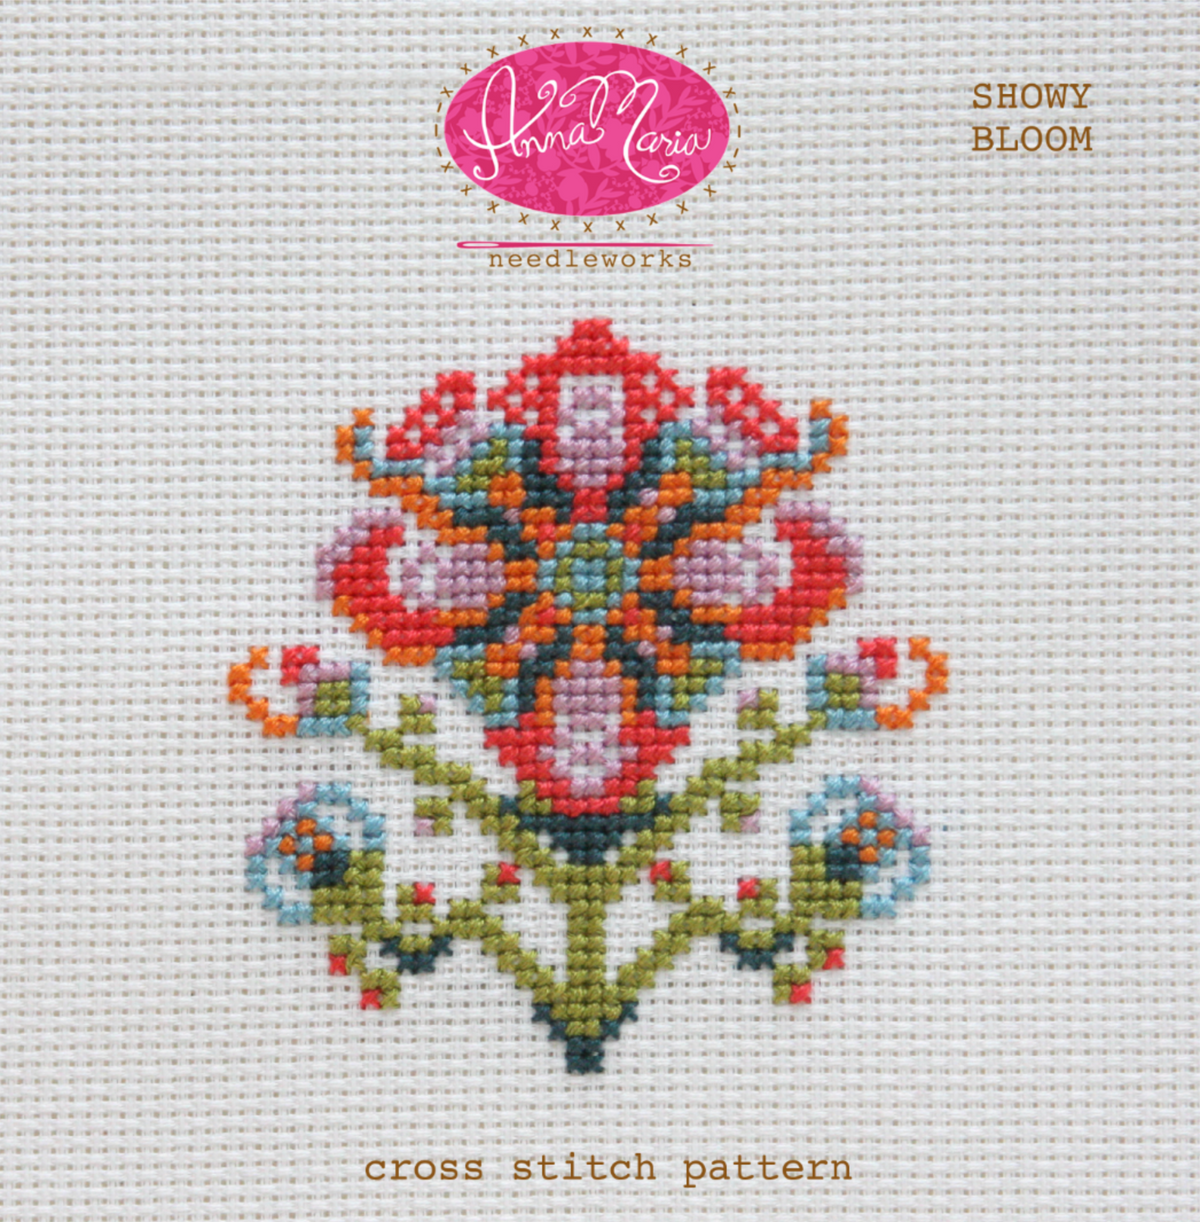 Showy Bloom Cross Stitch Pattern